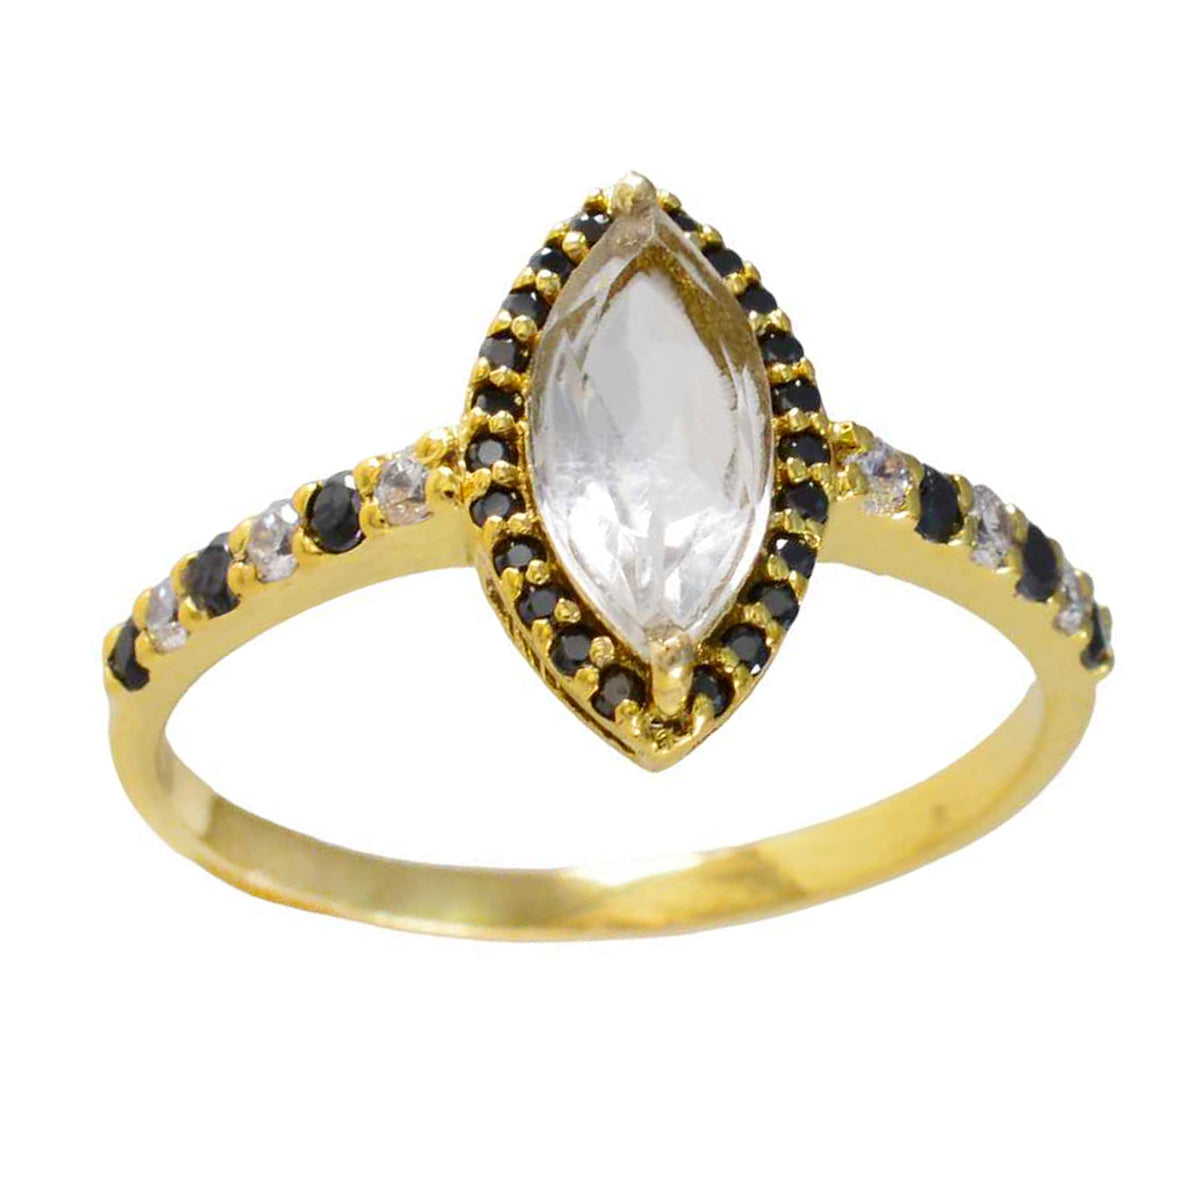 Anillo de plata cuantitativo riyo con chapado en oro amarillo, piedra de zafiro azul, forma de marquesa, ajuste de punta, joyería de diseñador, anillo de cóctel